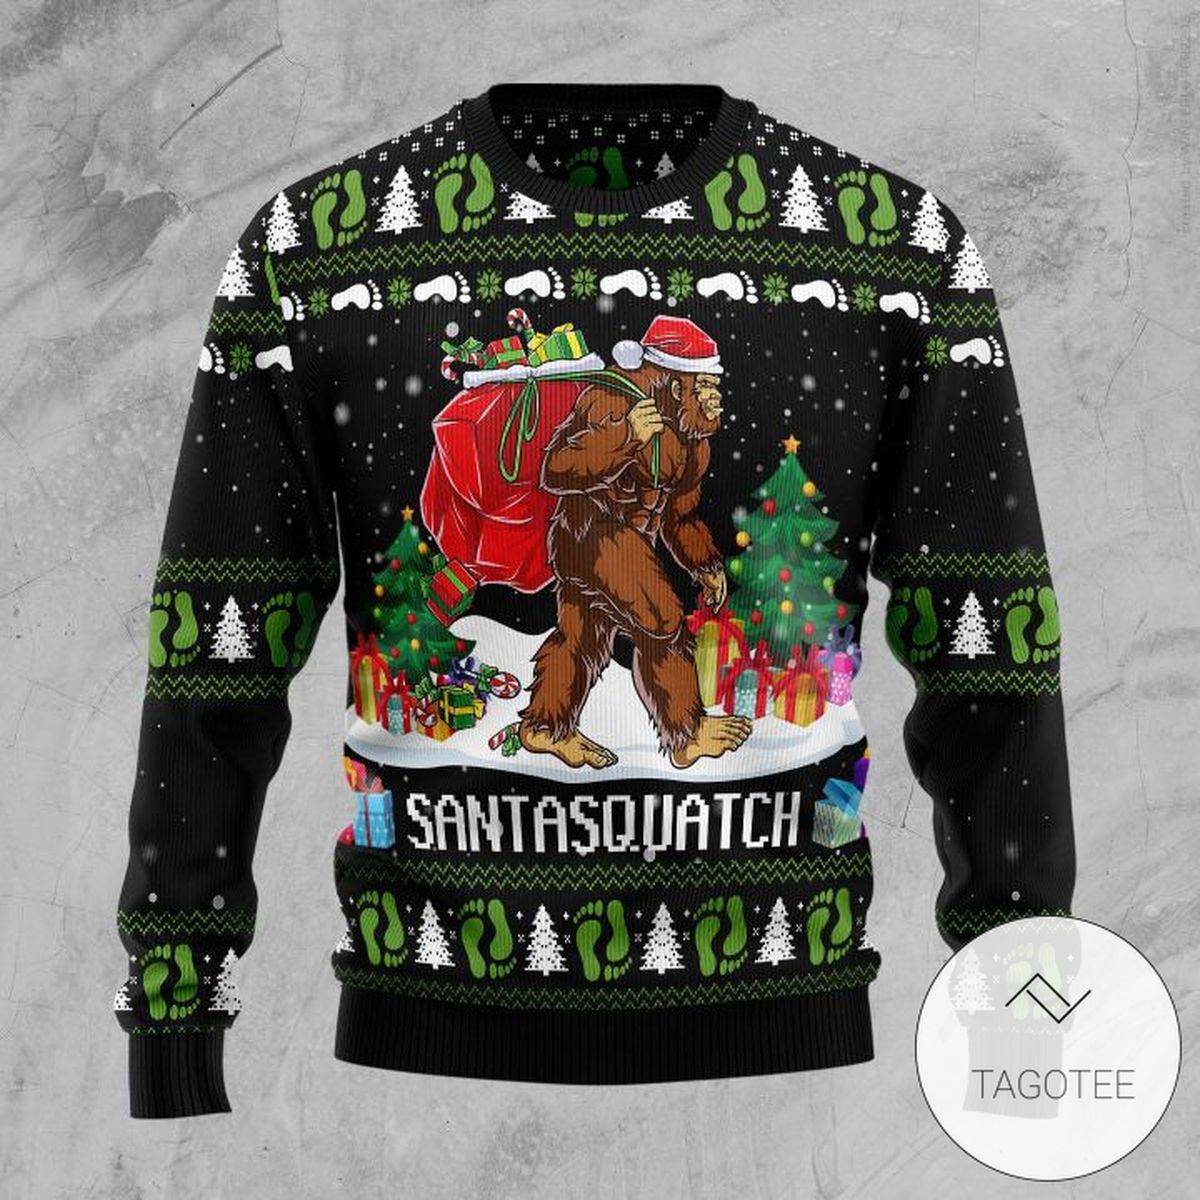 Bigfoot Santasquatch Sweatshirt Knitted Ugly Christmas Sweater